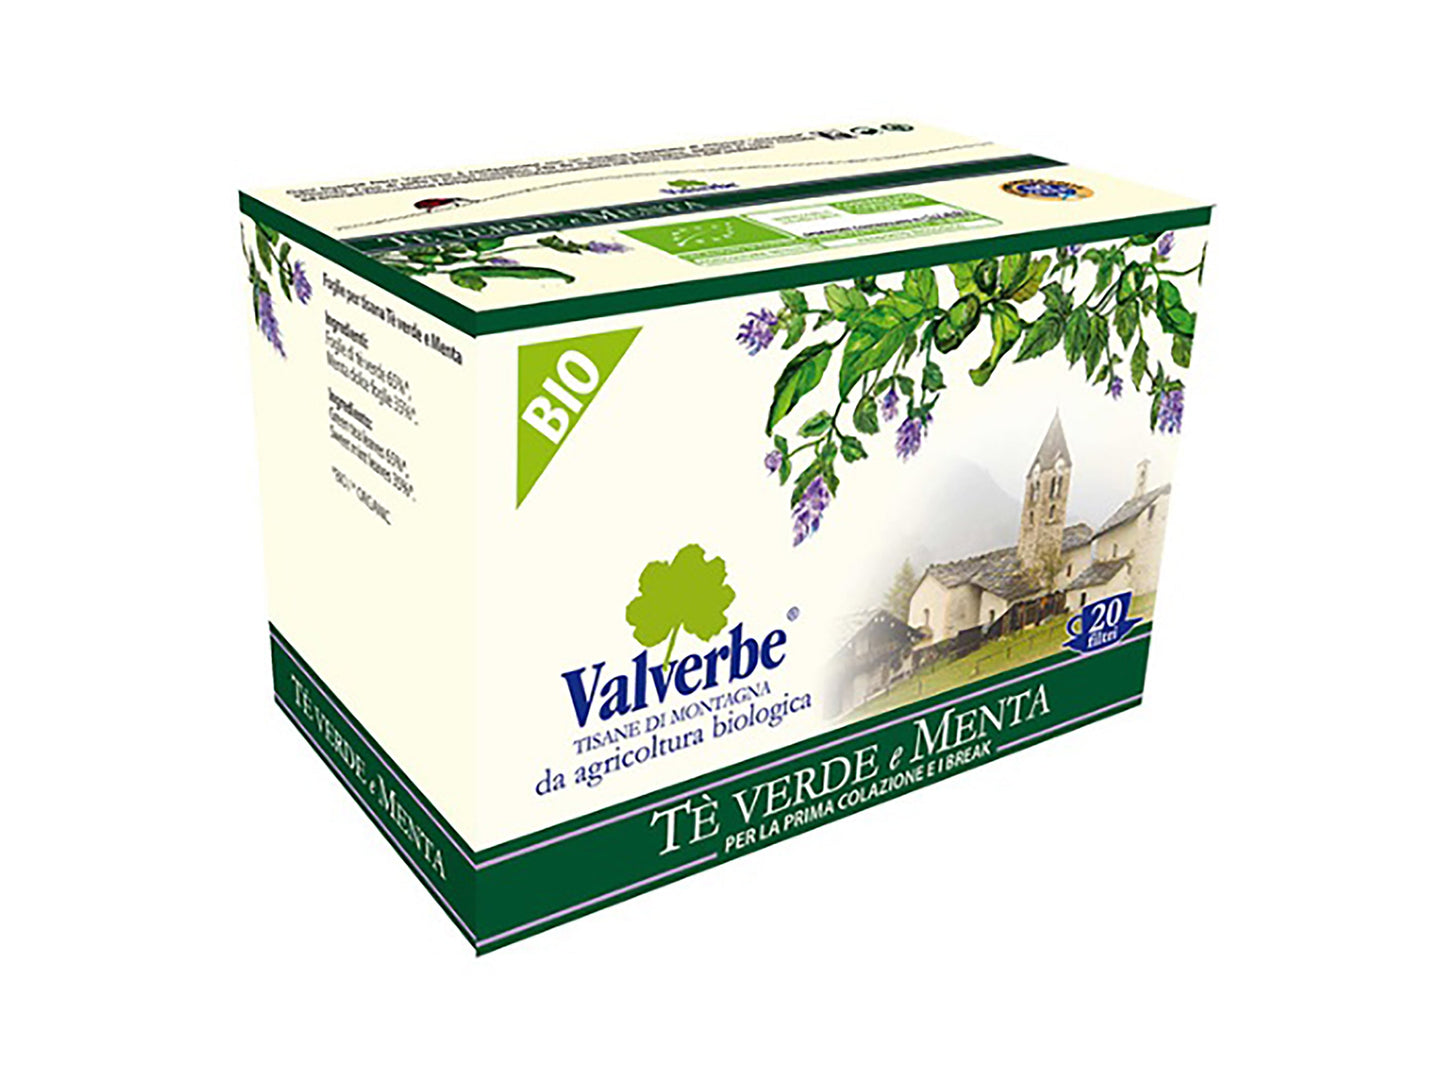 Tè Verde e Menta bio Valverbe-30g-20Filtri